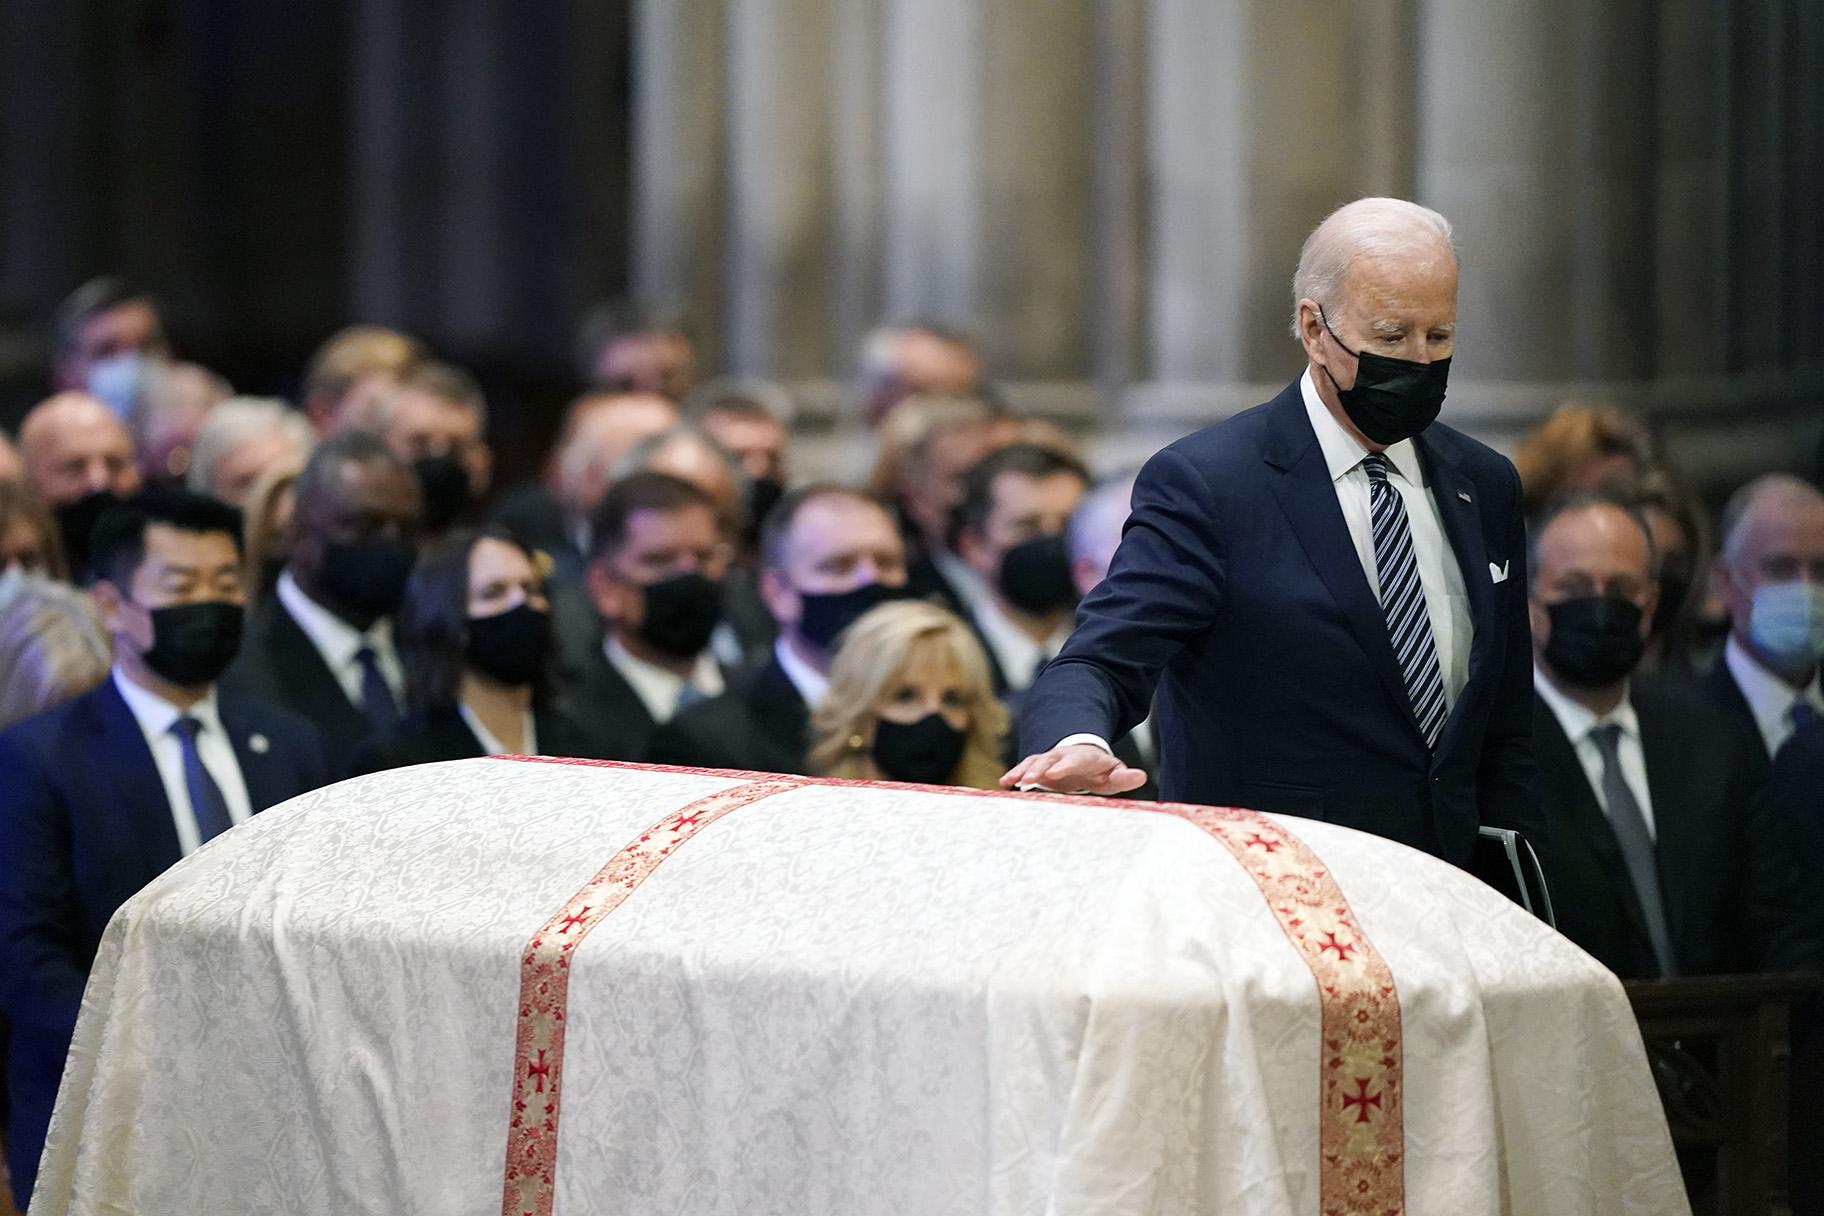 President Joe Biden walks to speak during the funeral of former Sen. Bob Dole of Kansas, at the Washington National Cathedral, Friday, Dec. 10, 2021, in Washington. (AP Photo / Jacquelyn Martin)